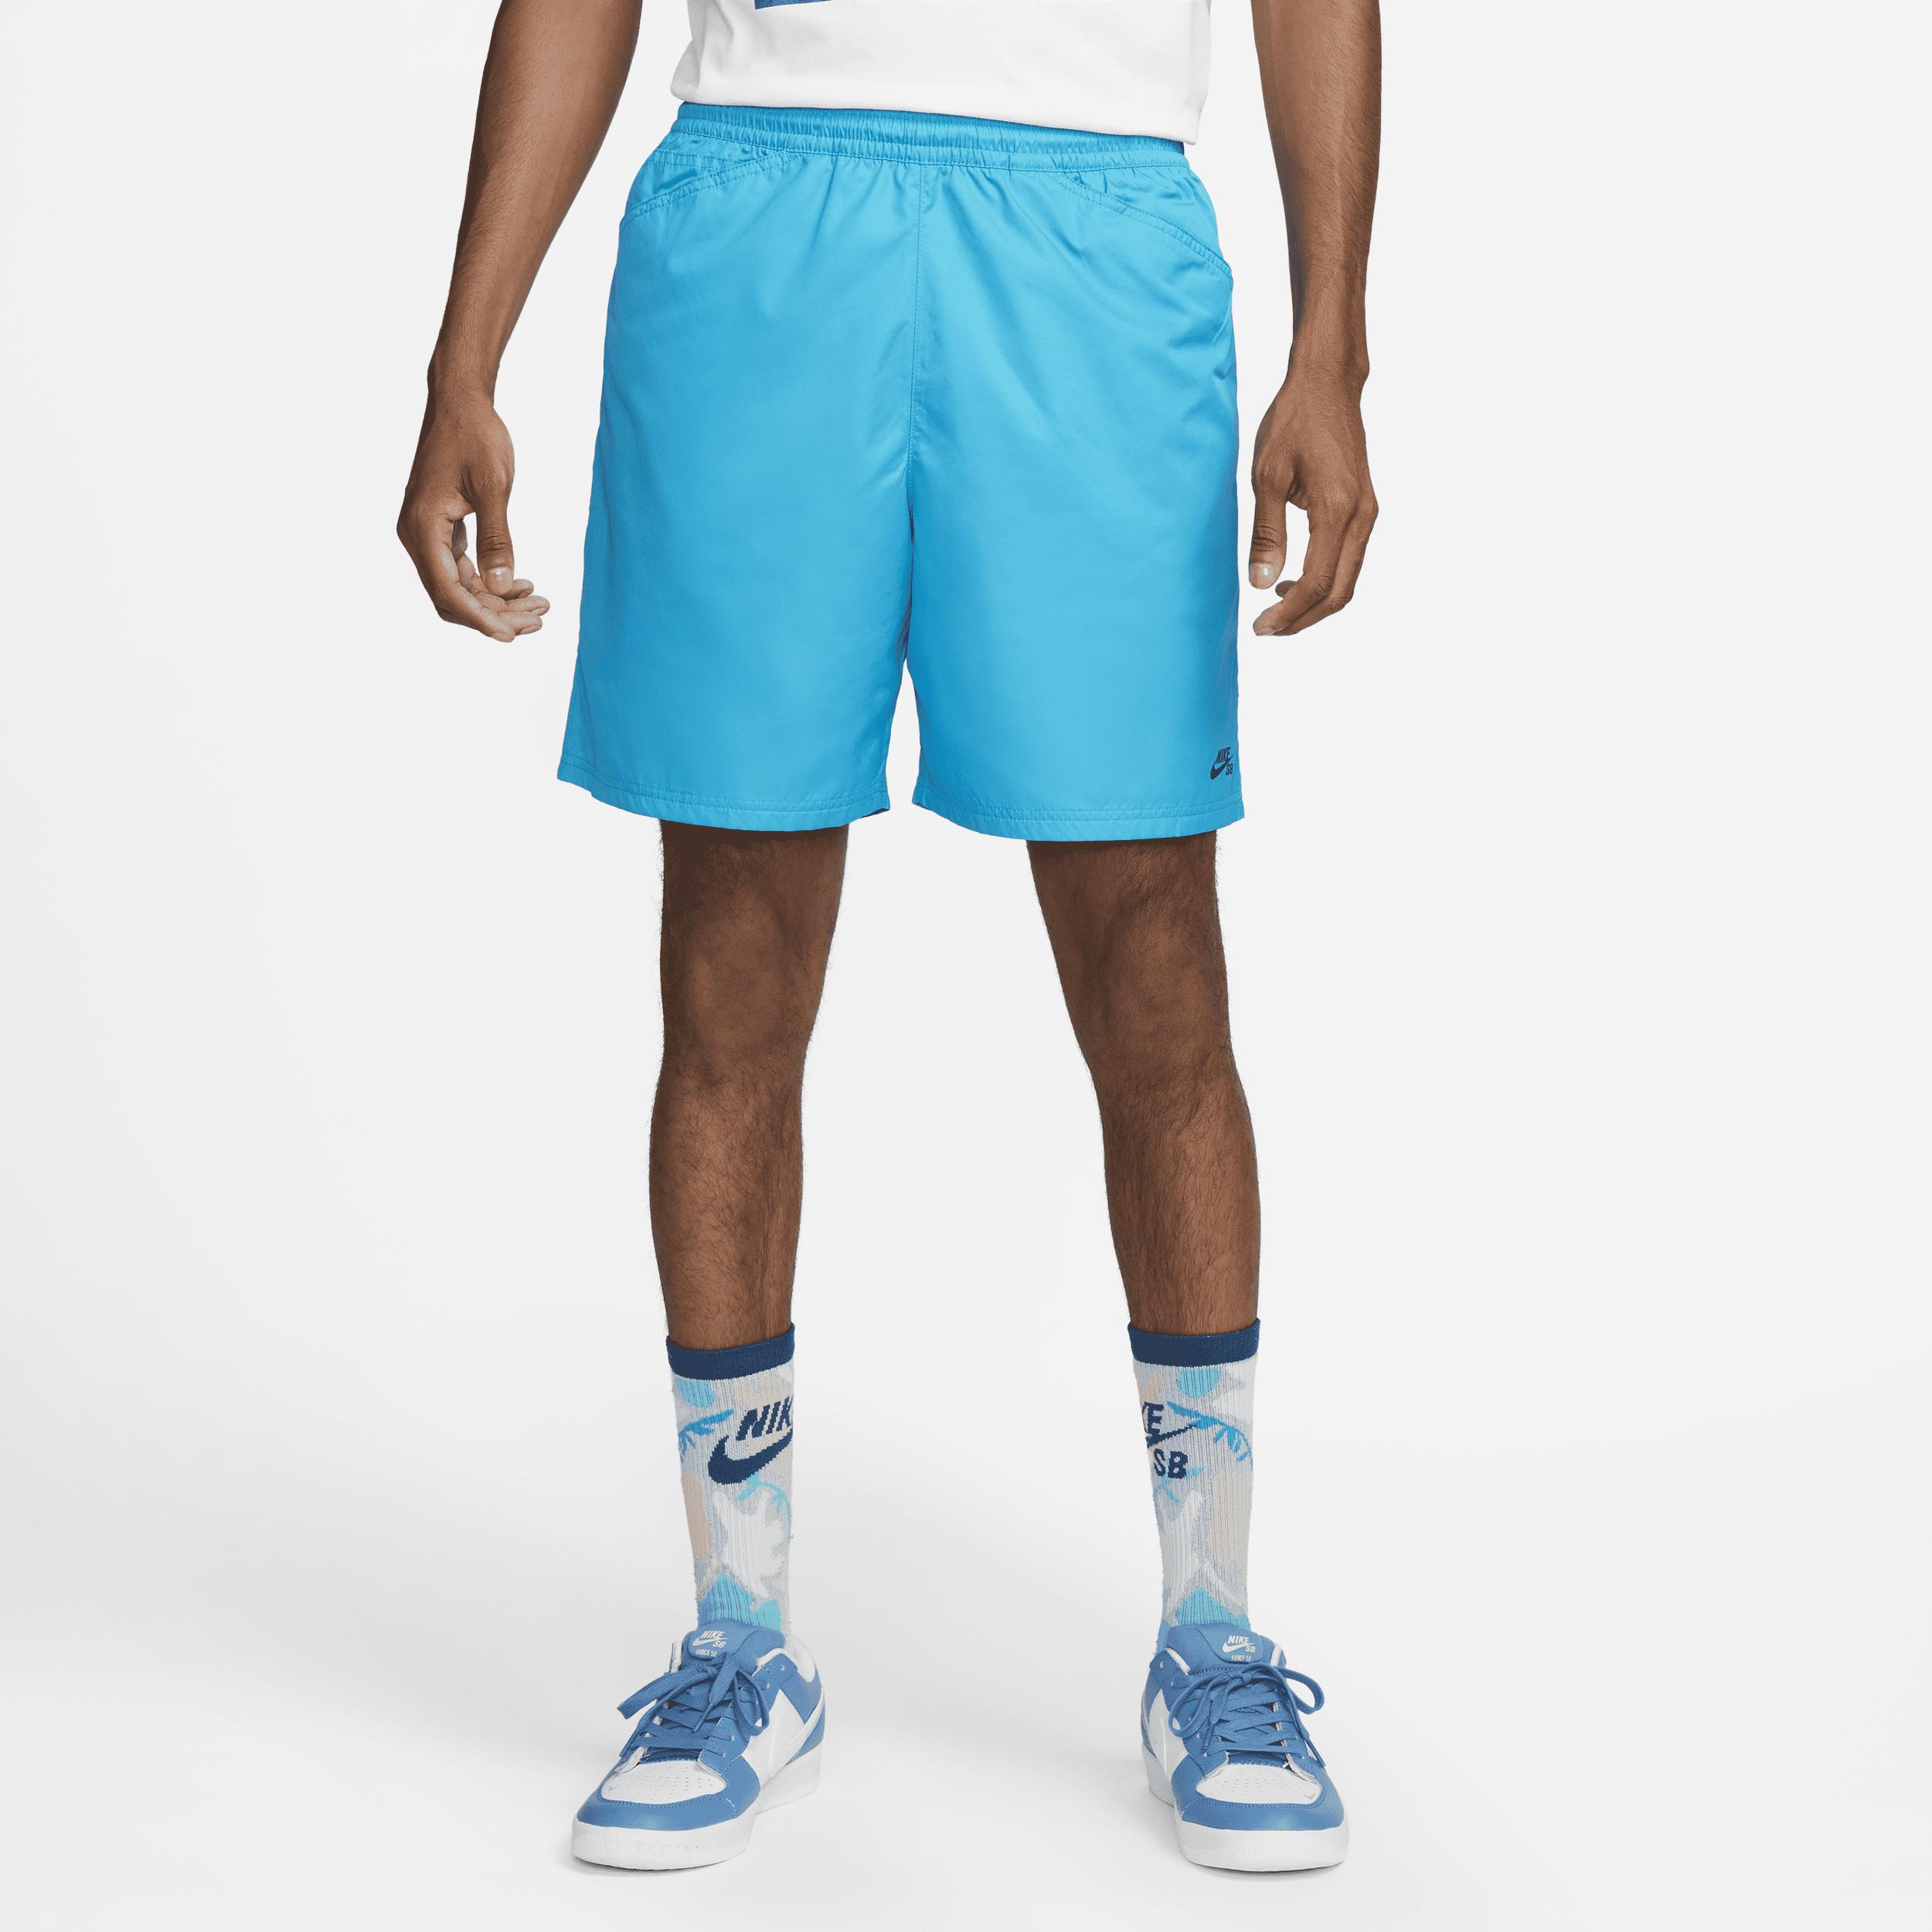 Nike Sb Skate Chino Shorts in Blue | Lyst